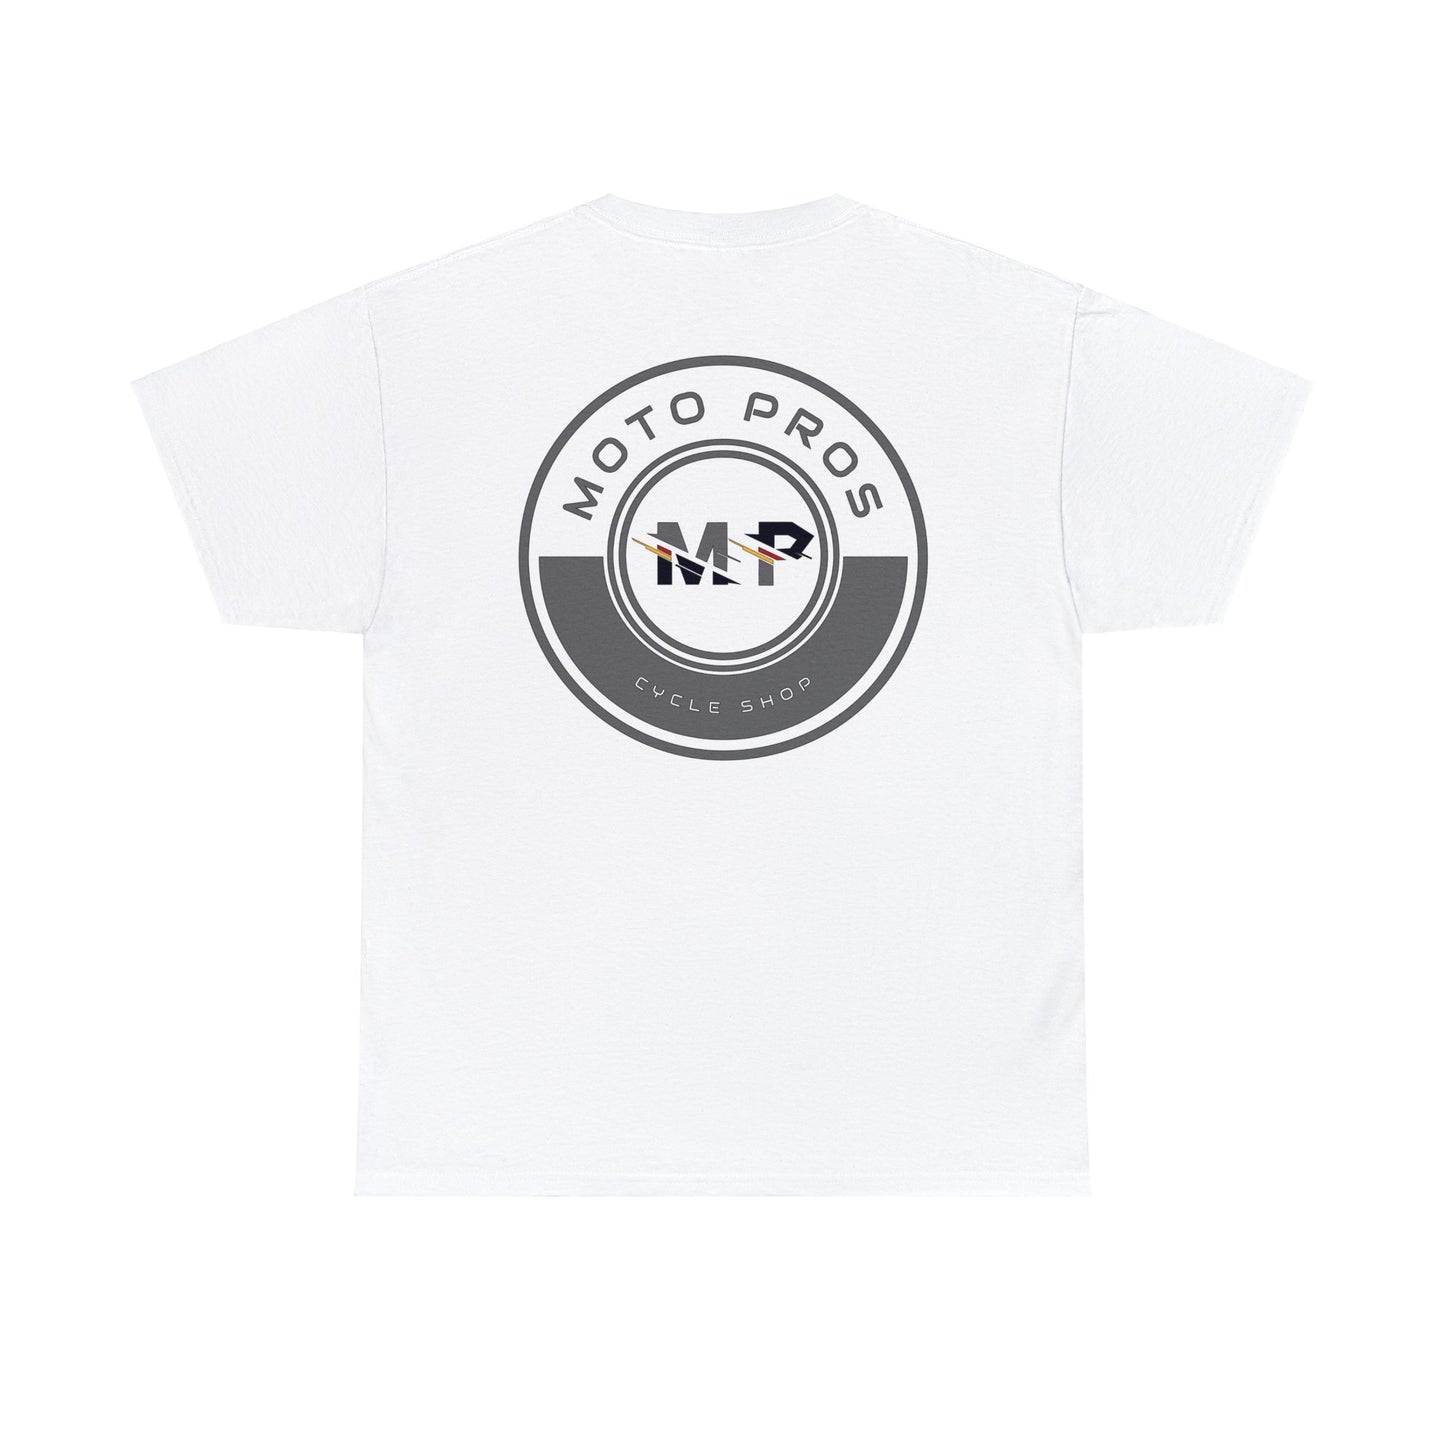 Moto Pros Cycle Shop T-Shirt